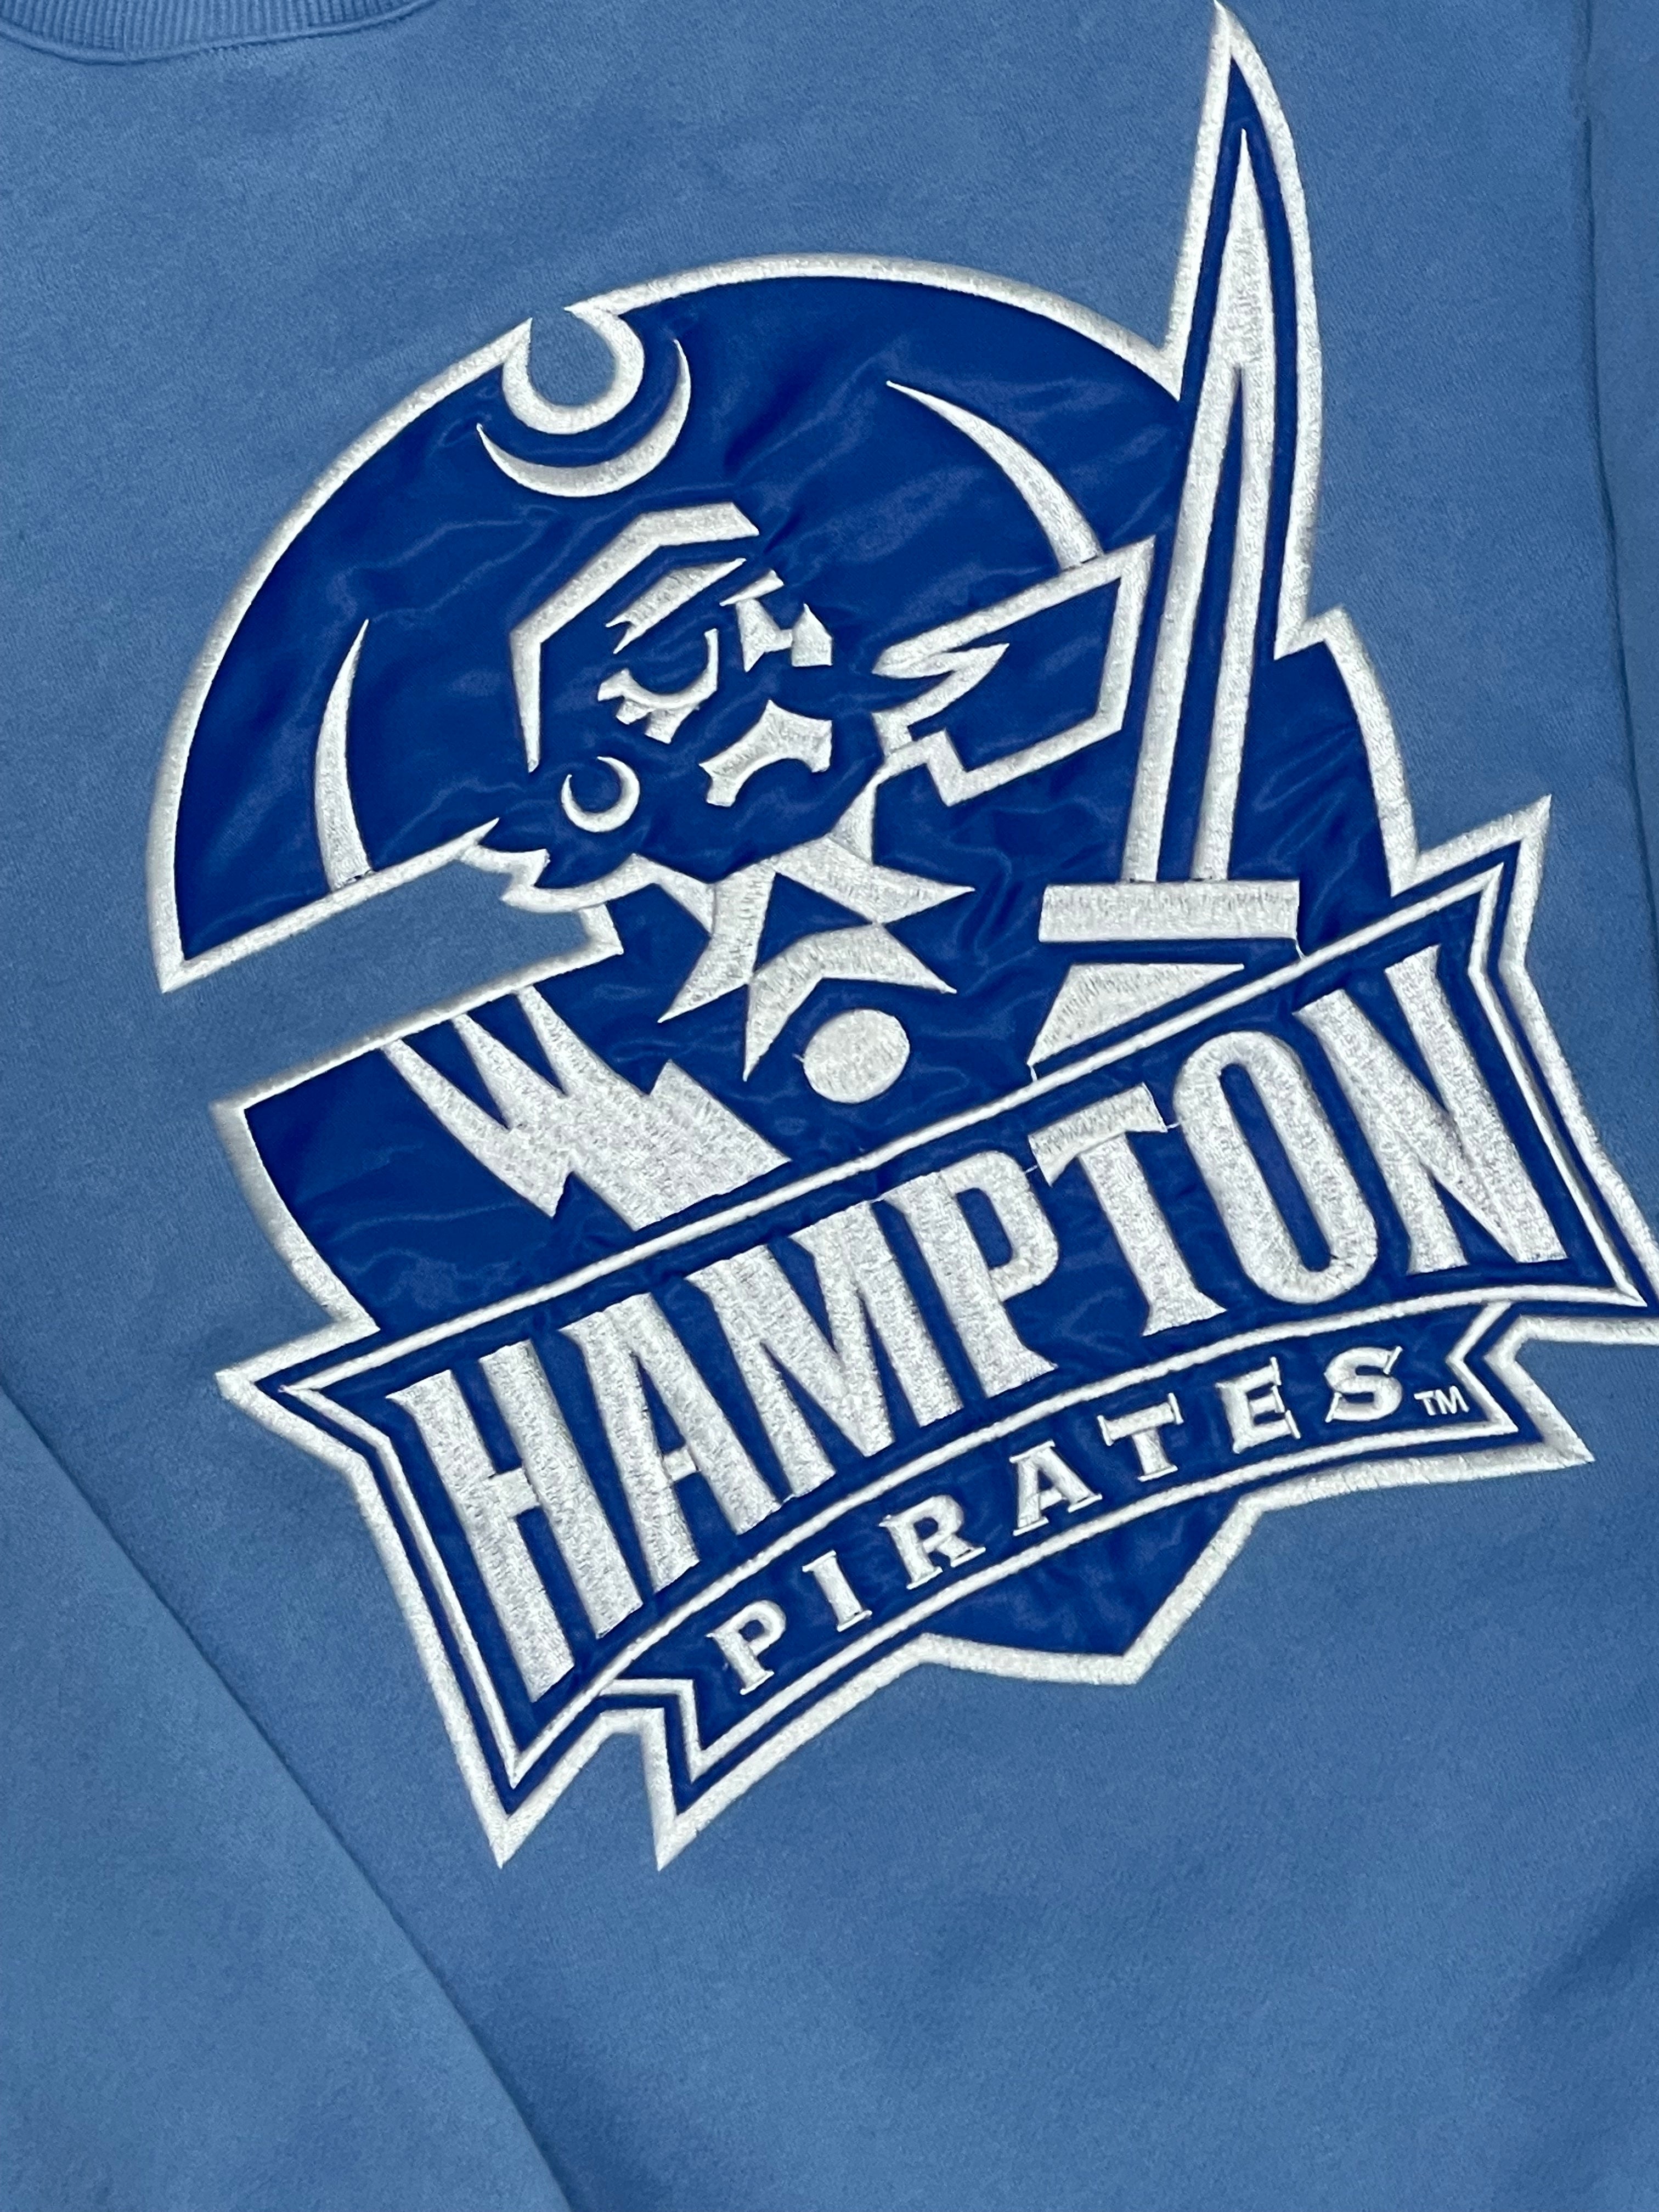 Hampton Pirates Crewneck Sweatshirt (Unisex Adults)